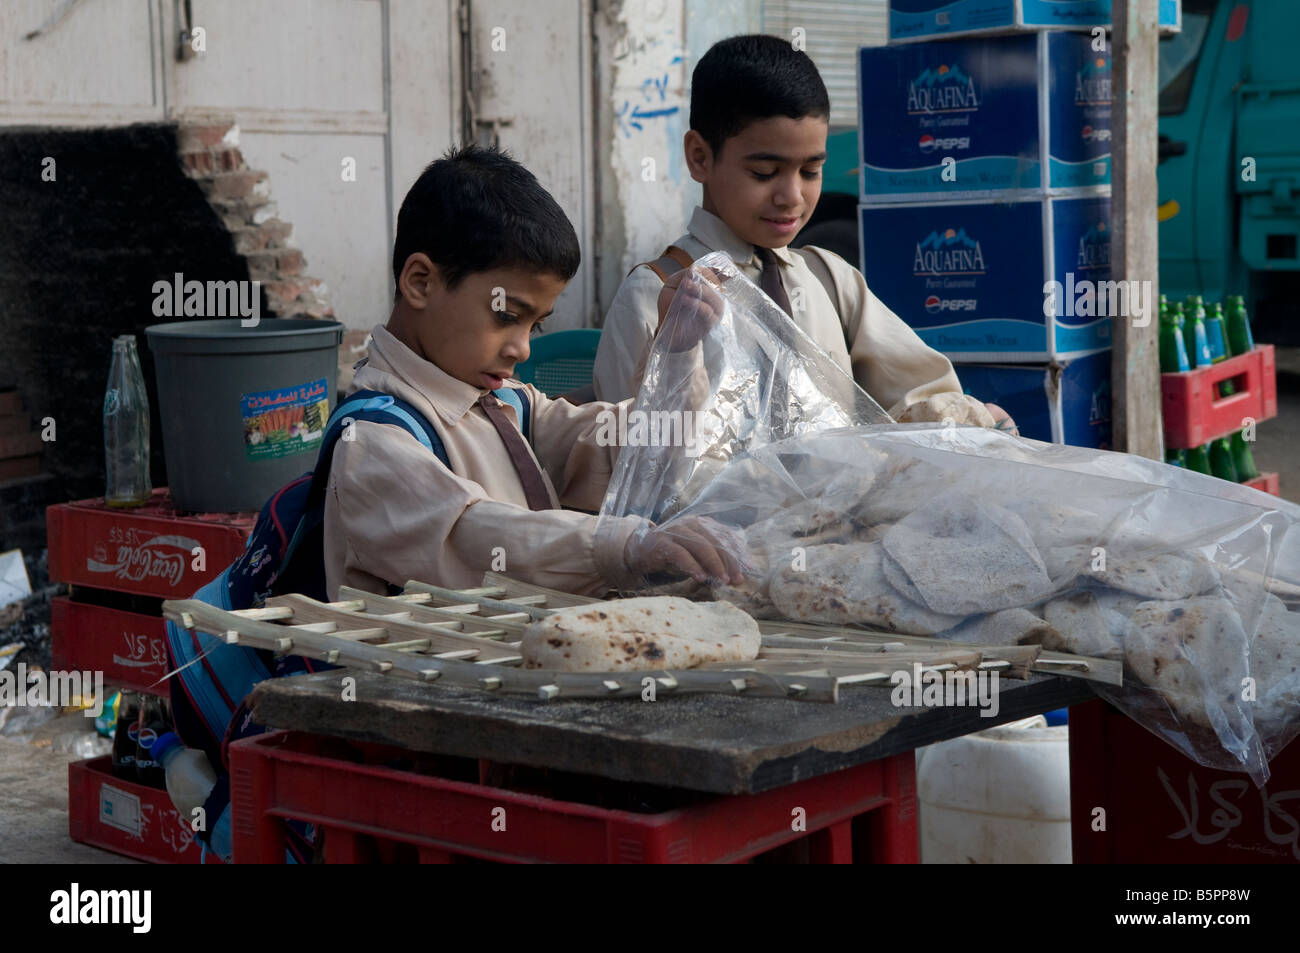 Schoolchildren buying traditional Pita bread on their way to school. Egypt Stock Photo